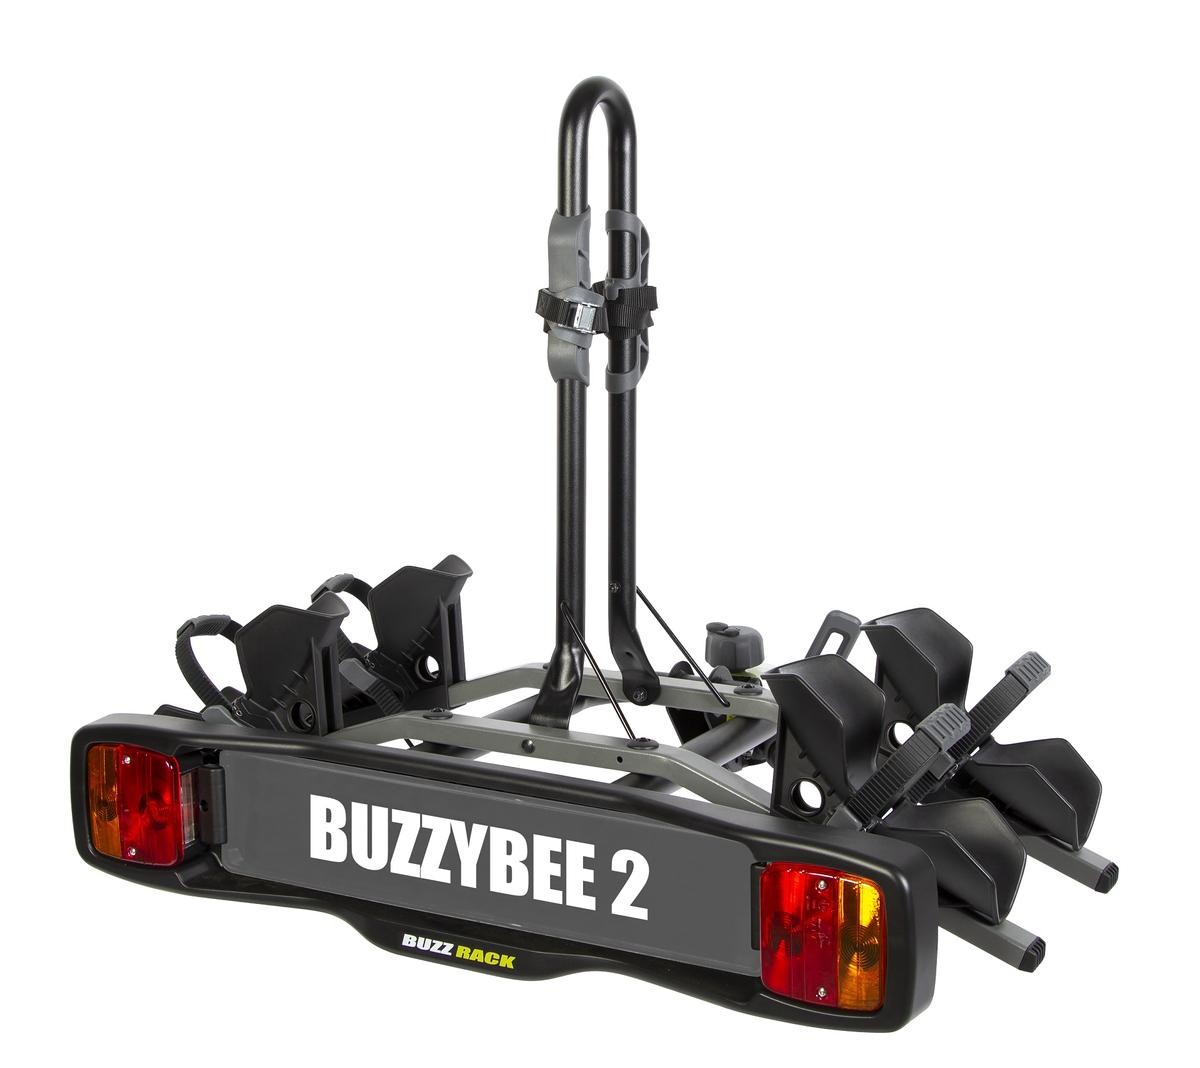 Rear mounted bike rack BUZZ RACK Buzzy Bee 2 5988